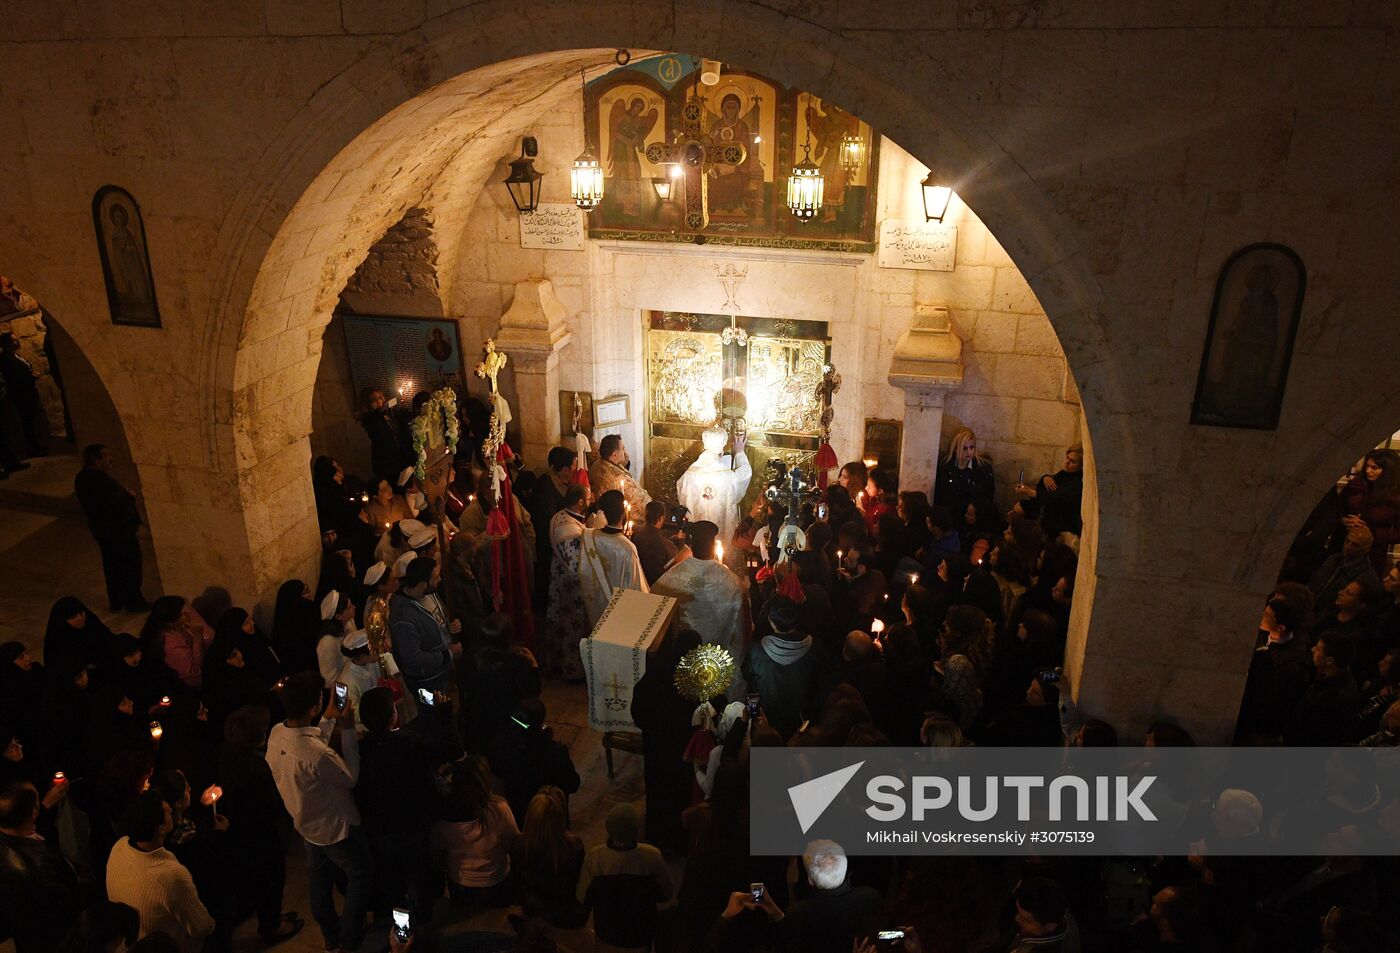 Easter service at church in Saidnaya, Syria